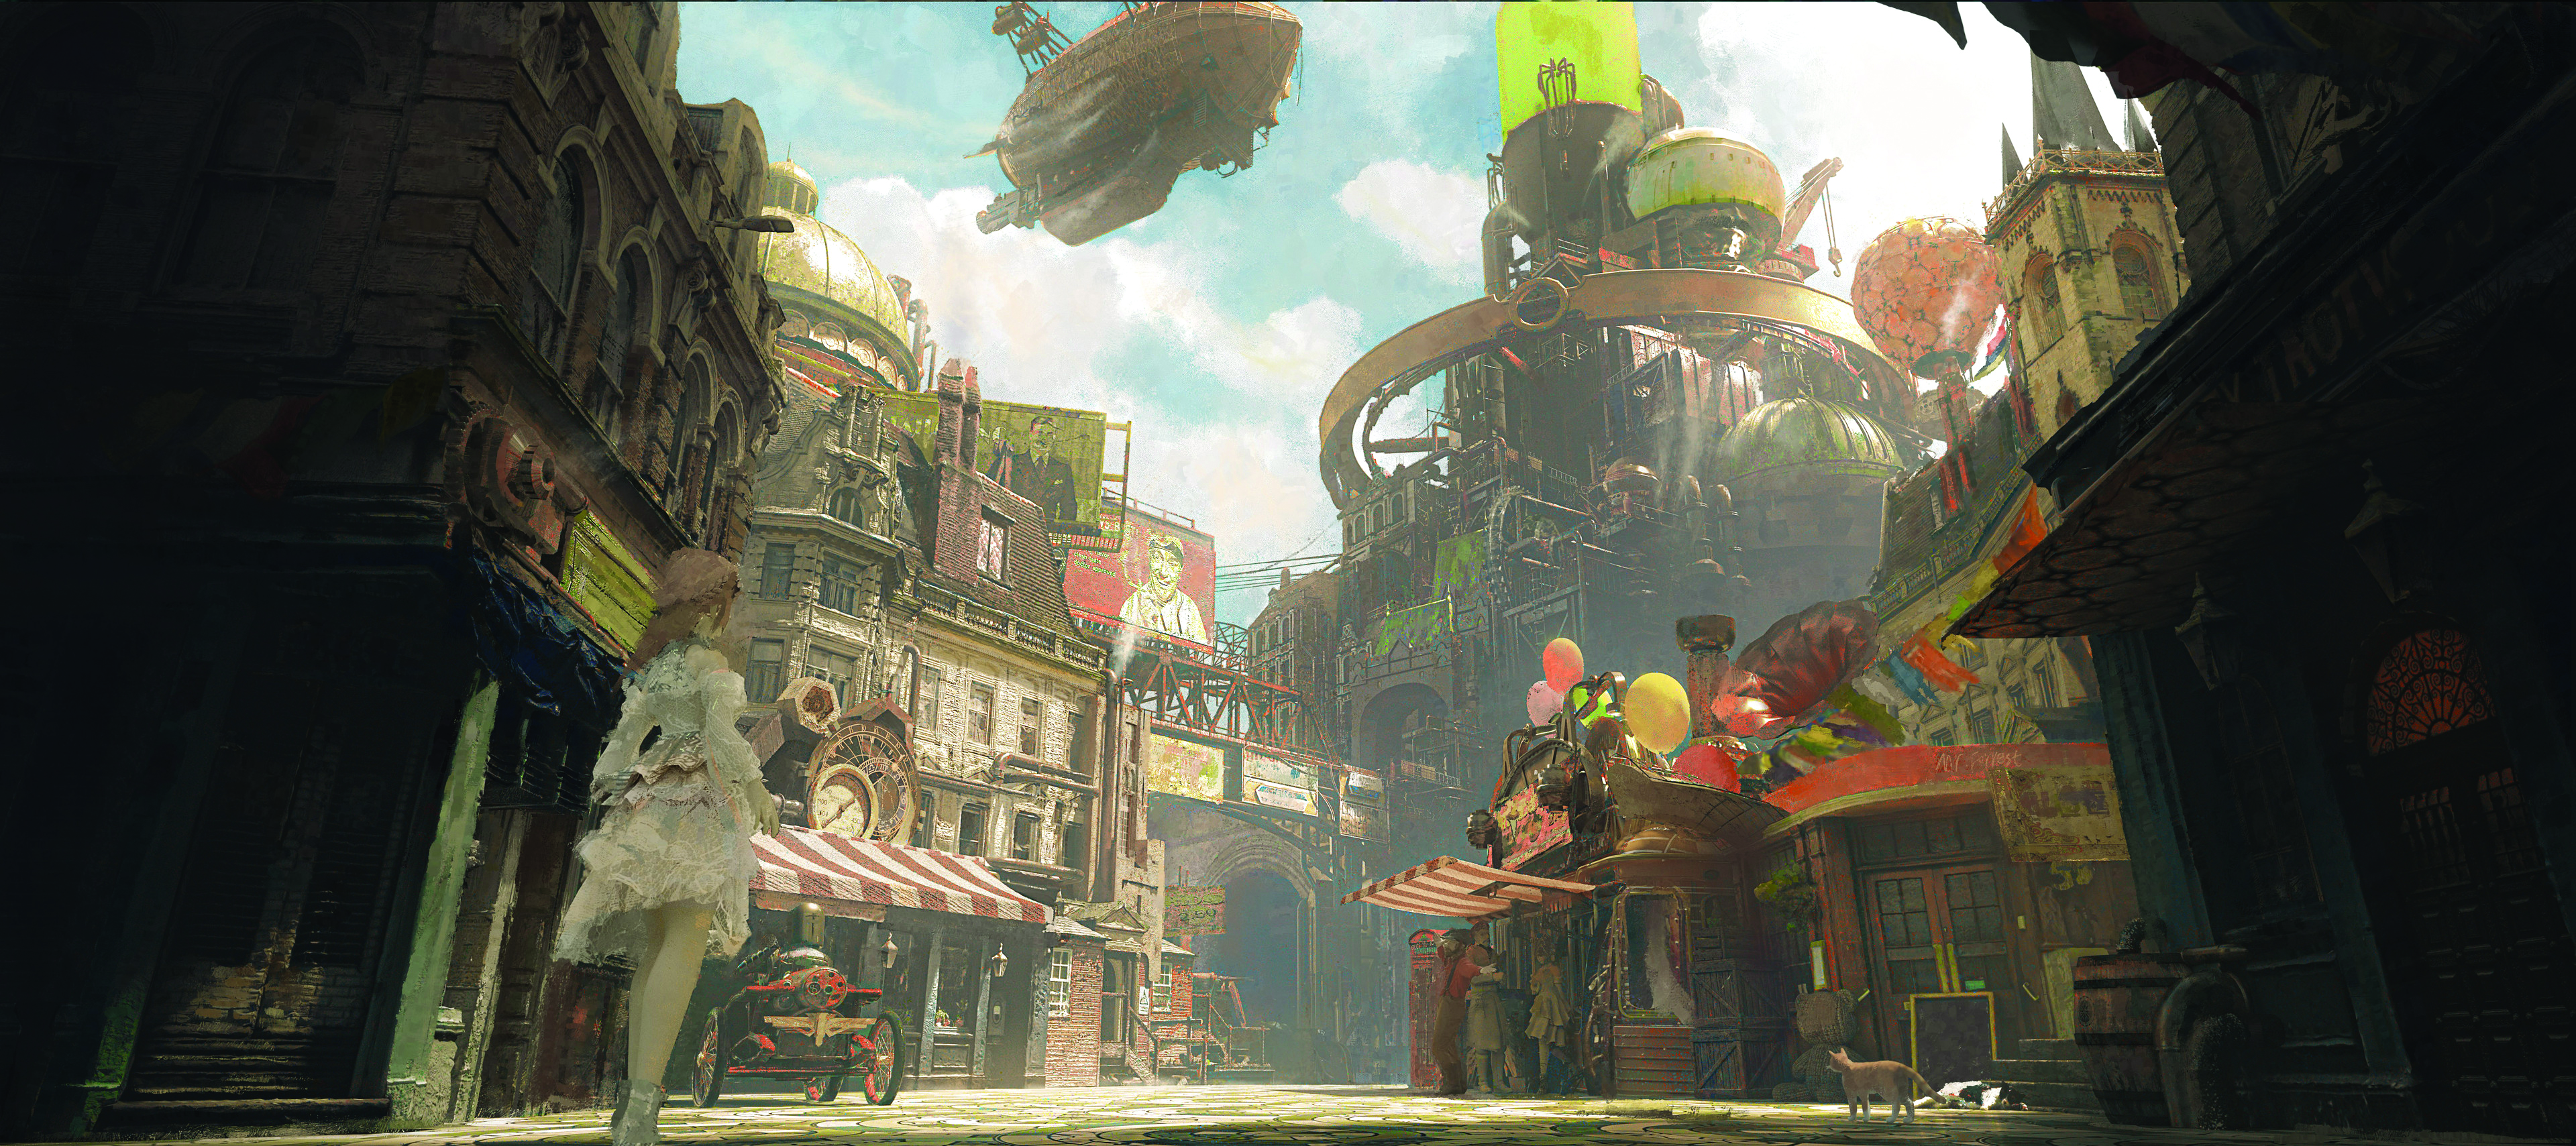 Concept artist Forrest White (artstation.com/bsl) created this BioShock Infinite-inspired steampunk city with Maxon Cinema 4D